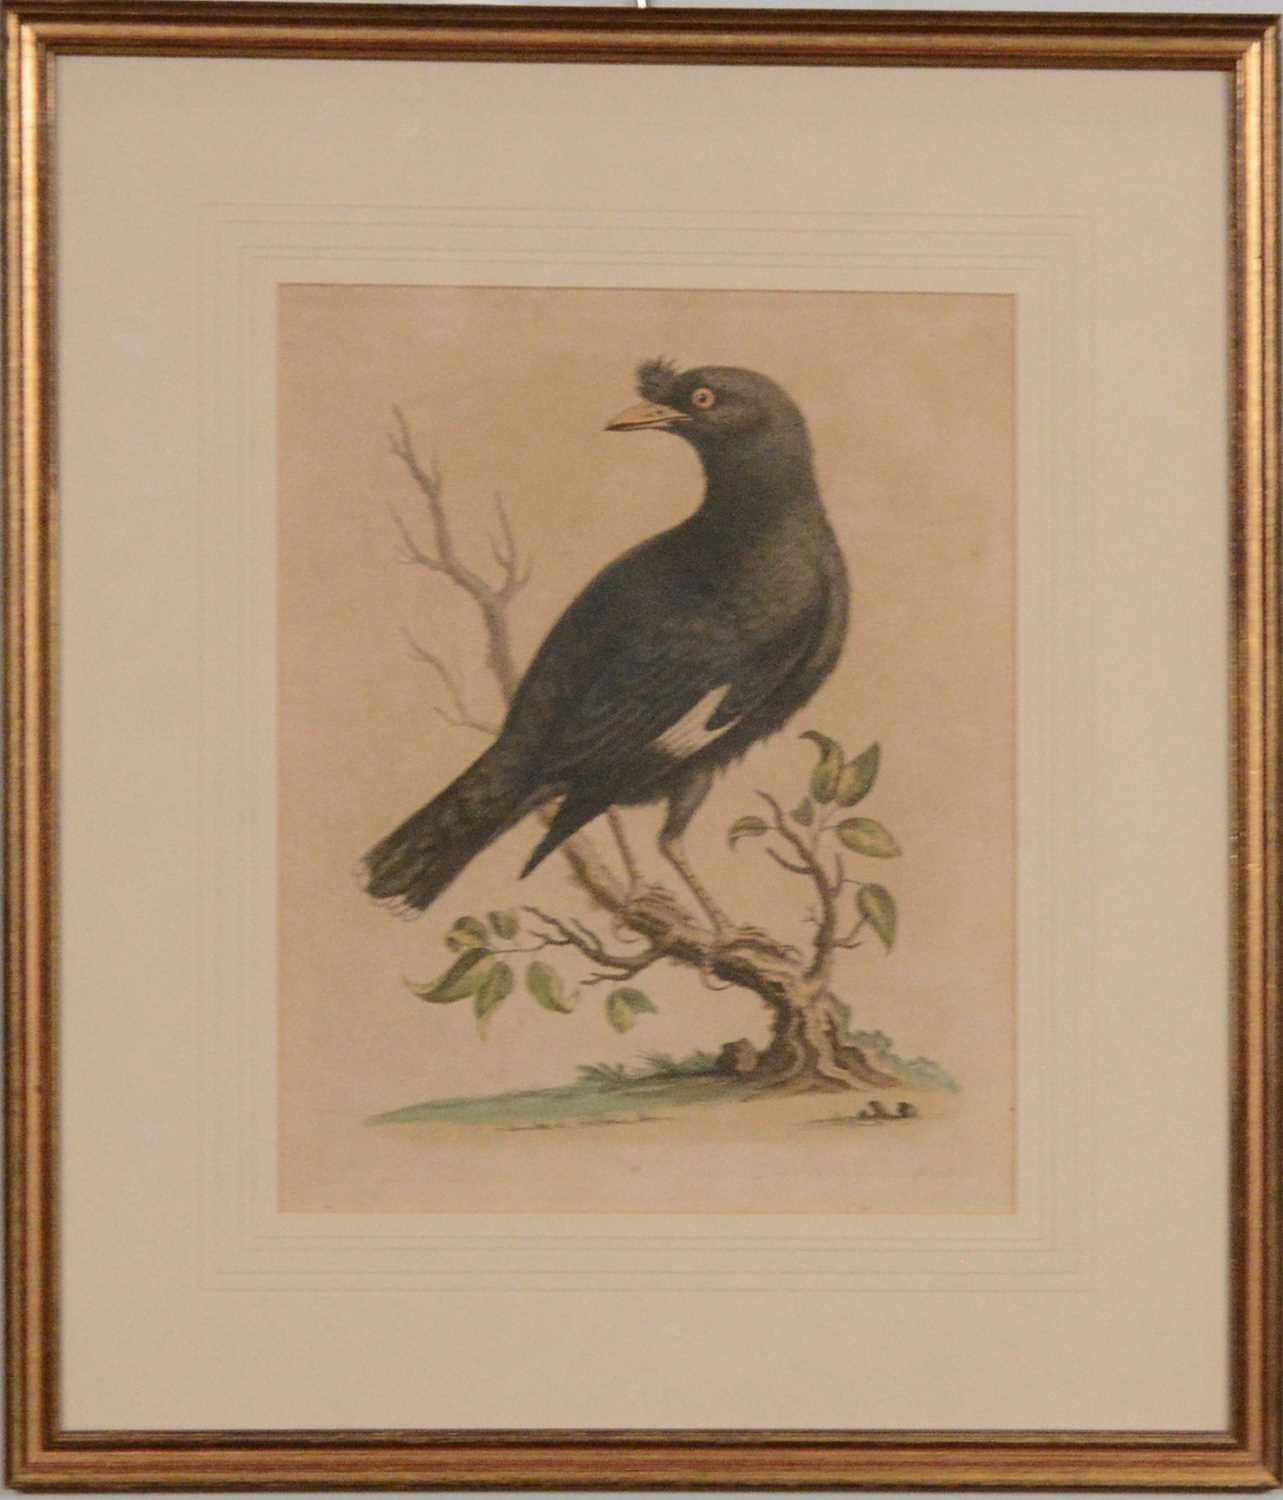 After George Edwards, fourteen ornithological bird prints, - Image 2 of 2